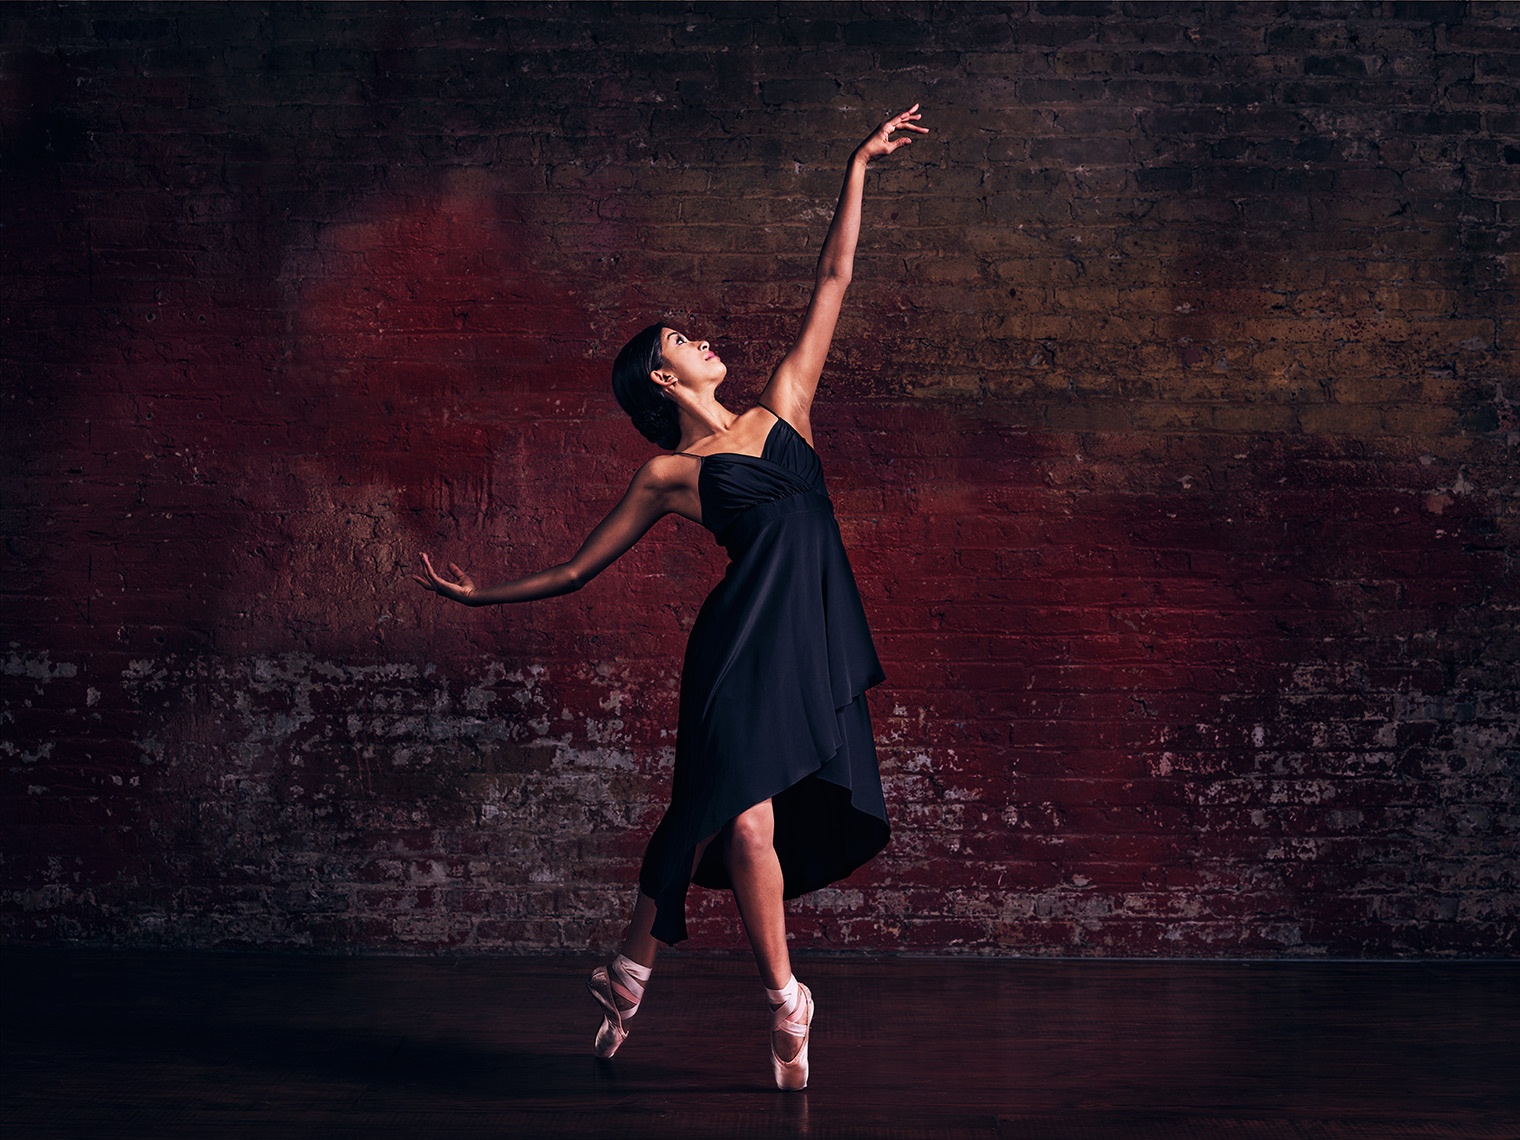 Ballerina_RobGregoryPhotography_03